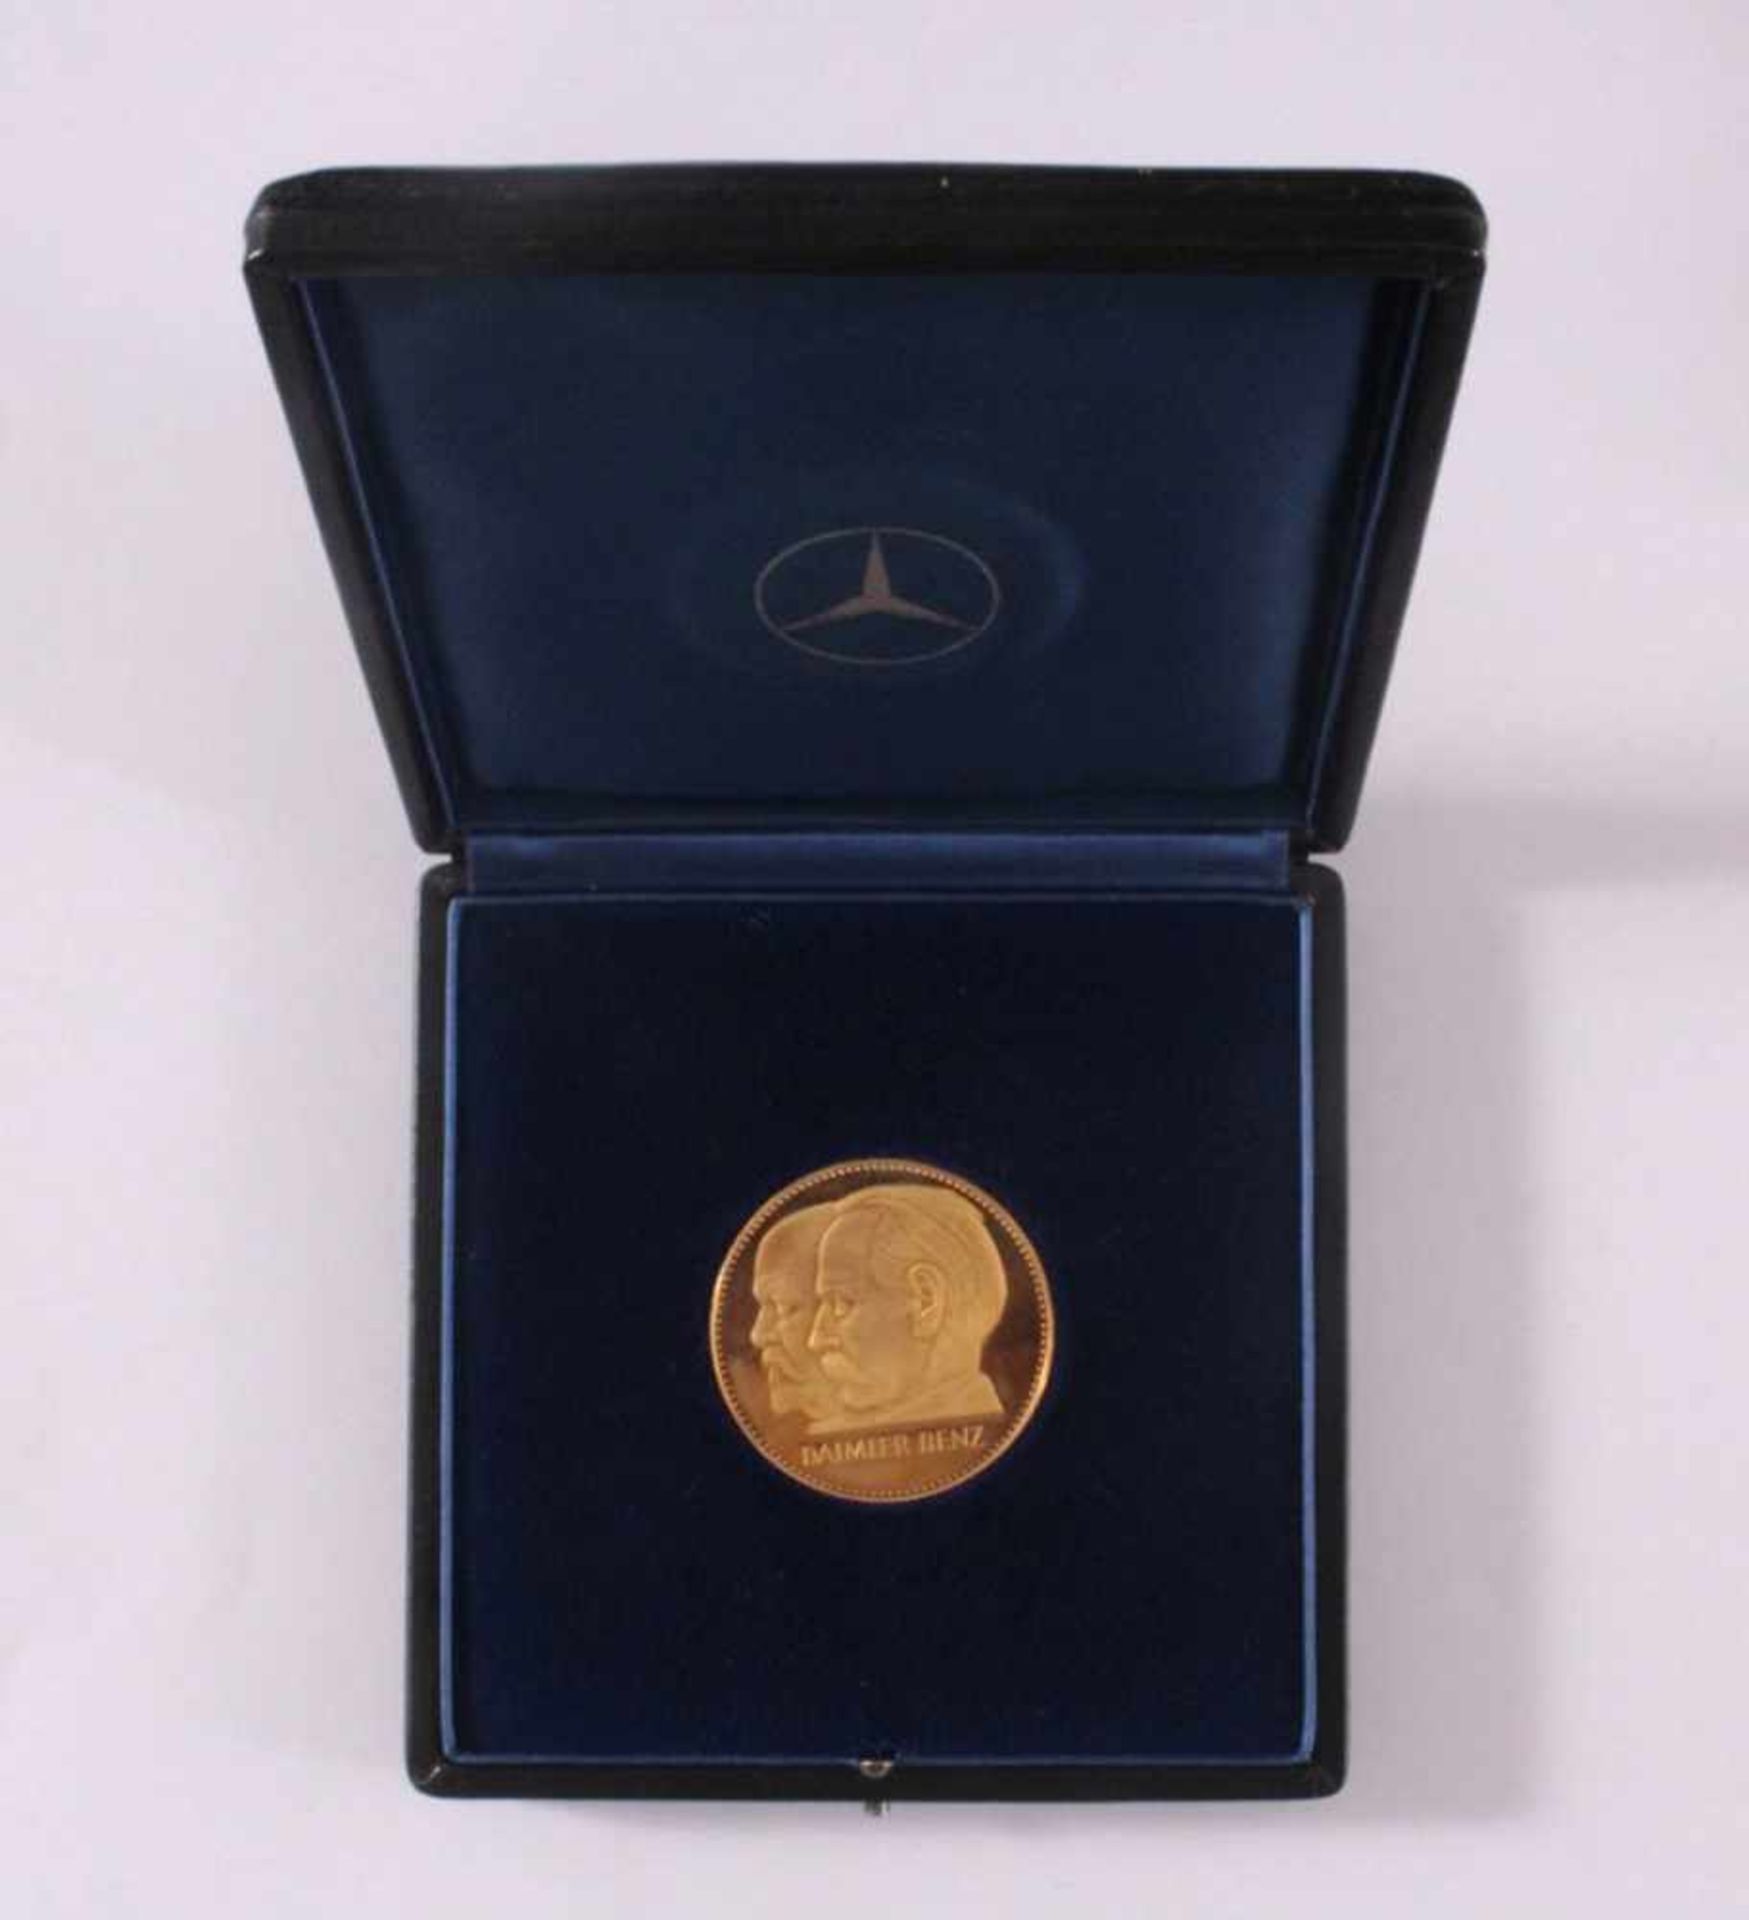 Goldmedaille Daimler Benz, 900/000 GG75 Jahre Motorisierung des Verkehrs 1886-1961,Durchmesser ca. 4 - Bild 3 aus 3